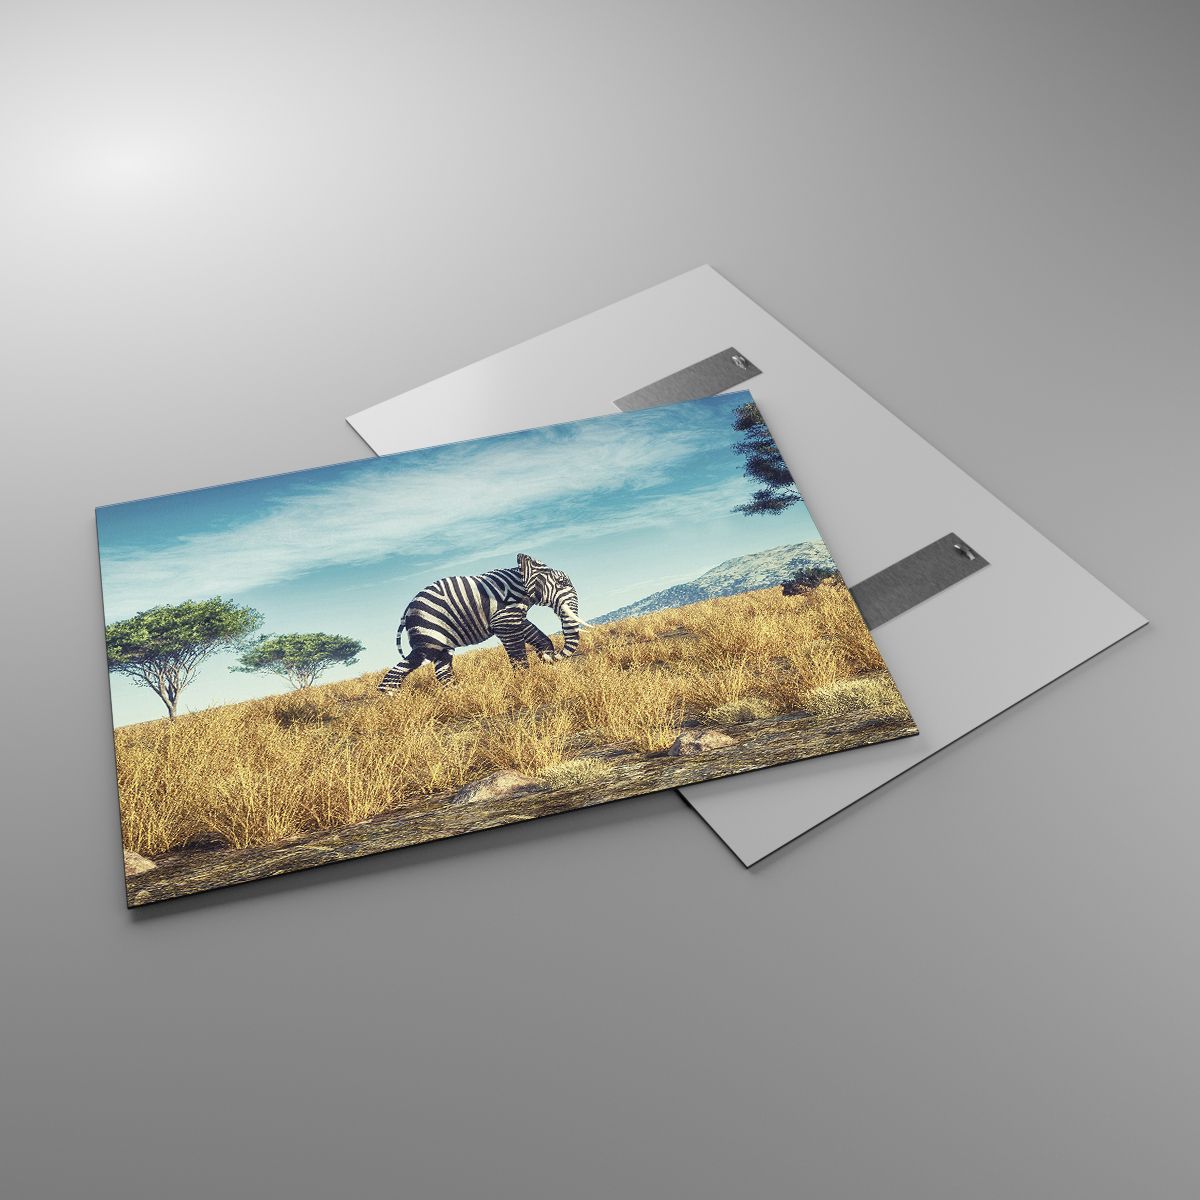 Glasbild Abstraktion, Glasbild Elefant, Glasbild Rippen, Glasbild Landschaft, Glasbild Afrika